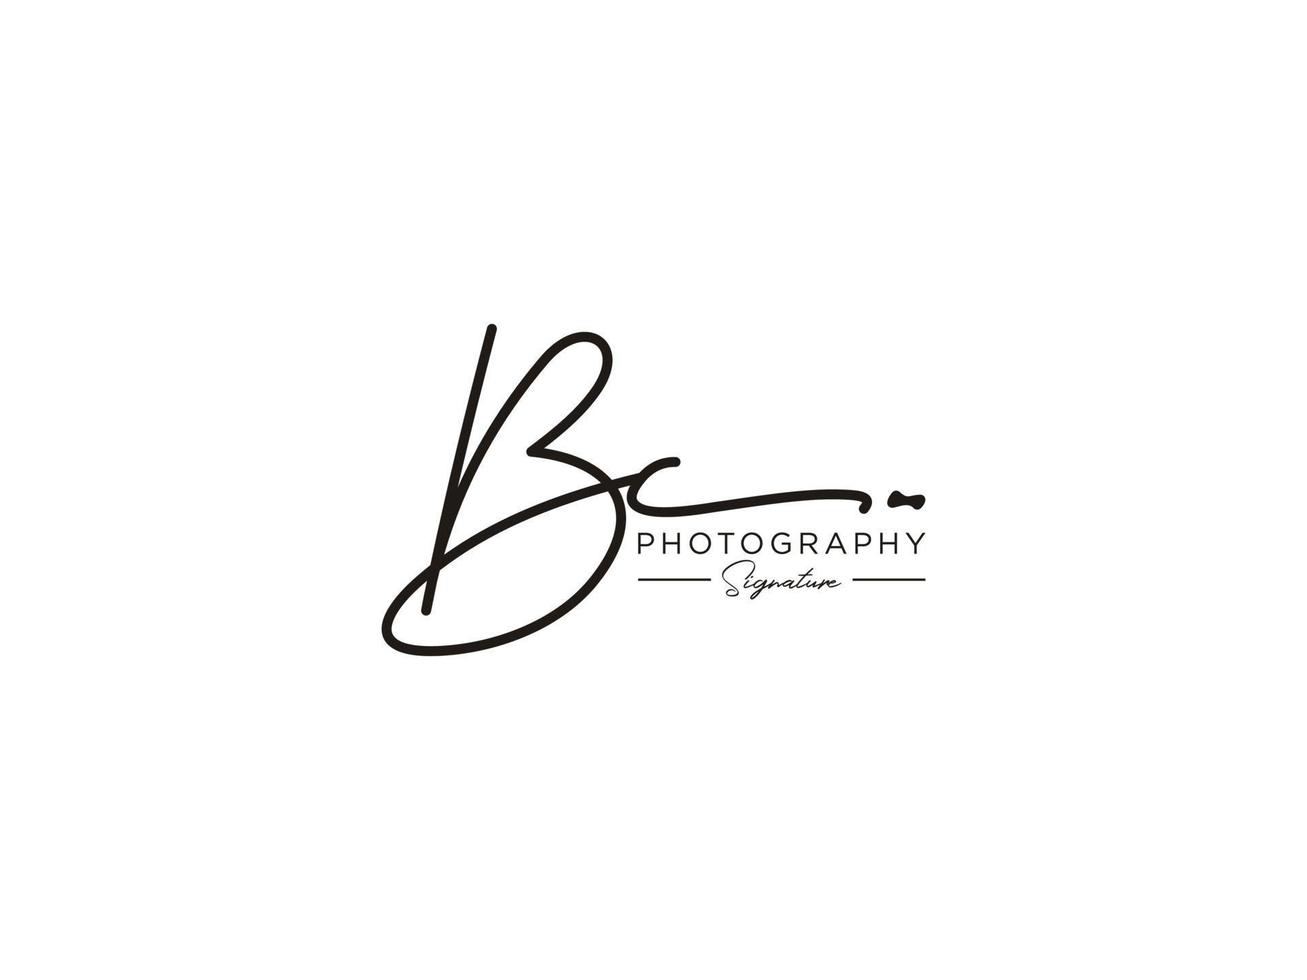 bokstaven bc signatur logotyp mall vektor